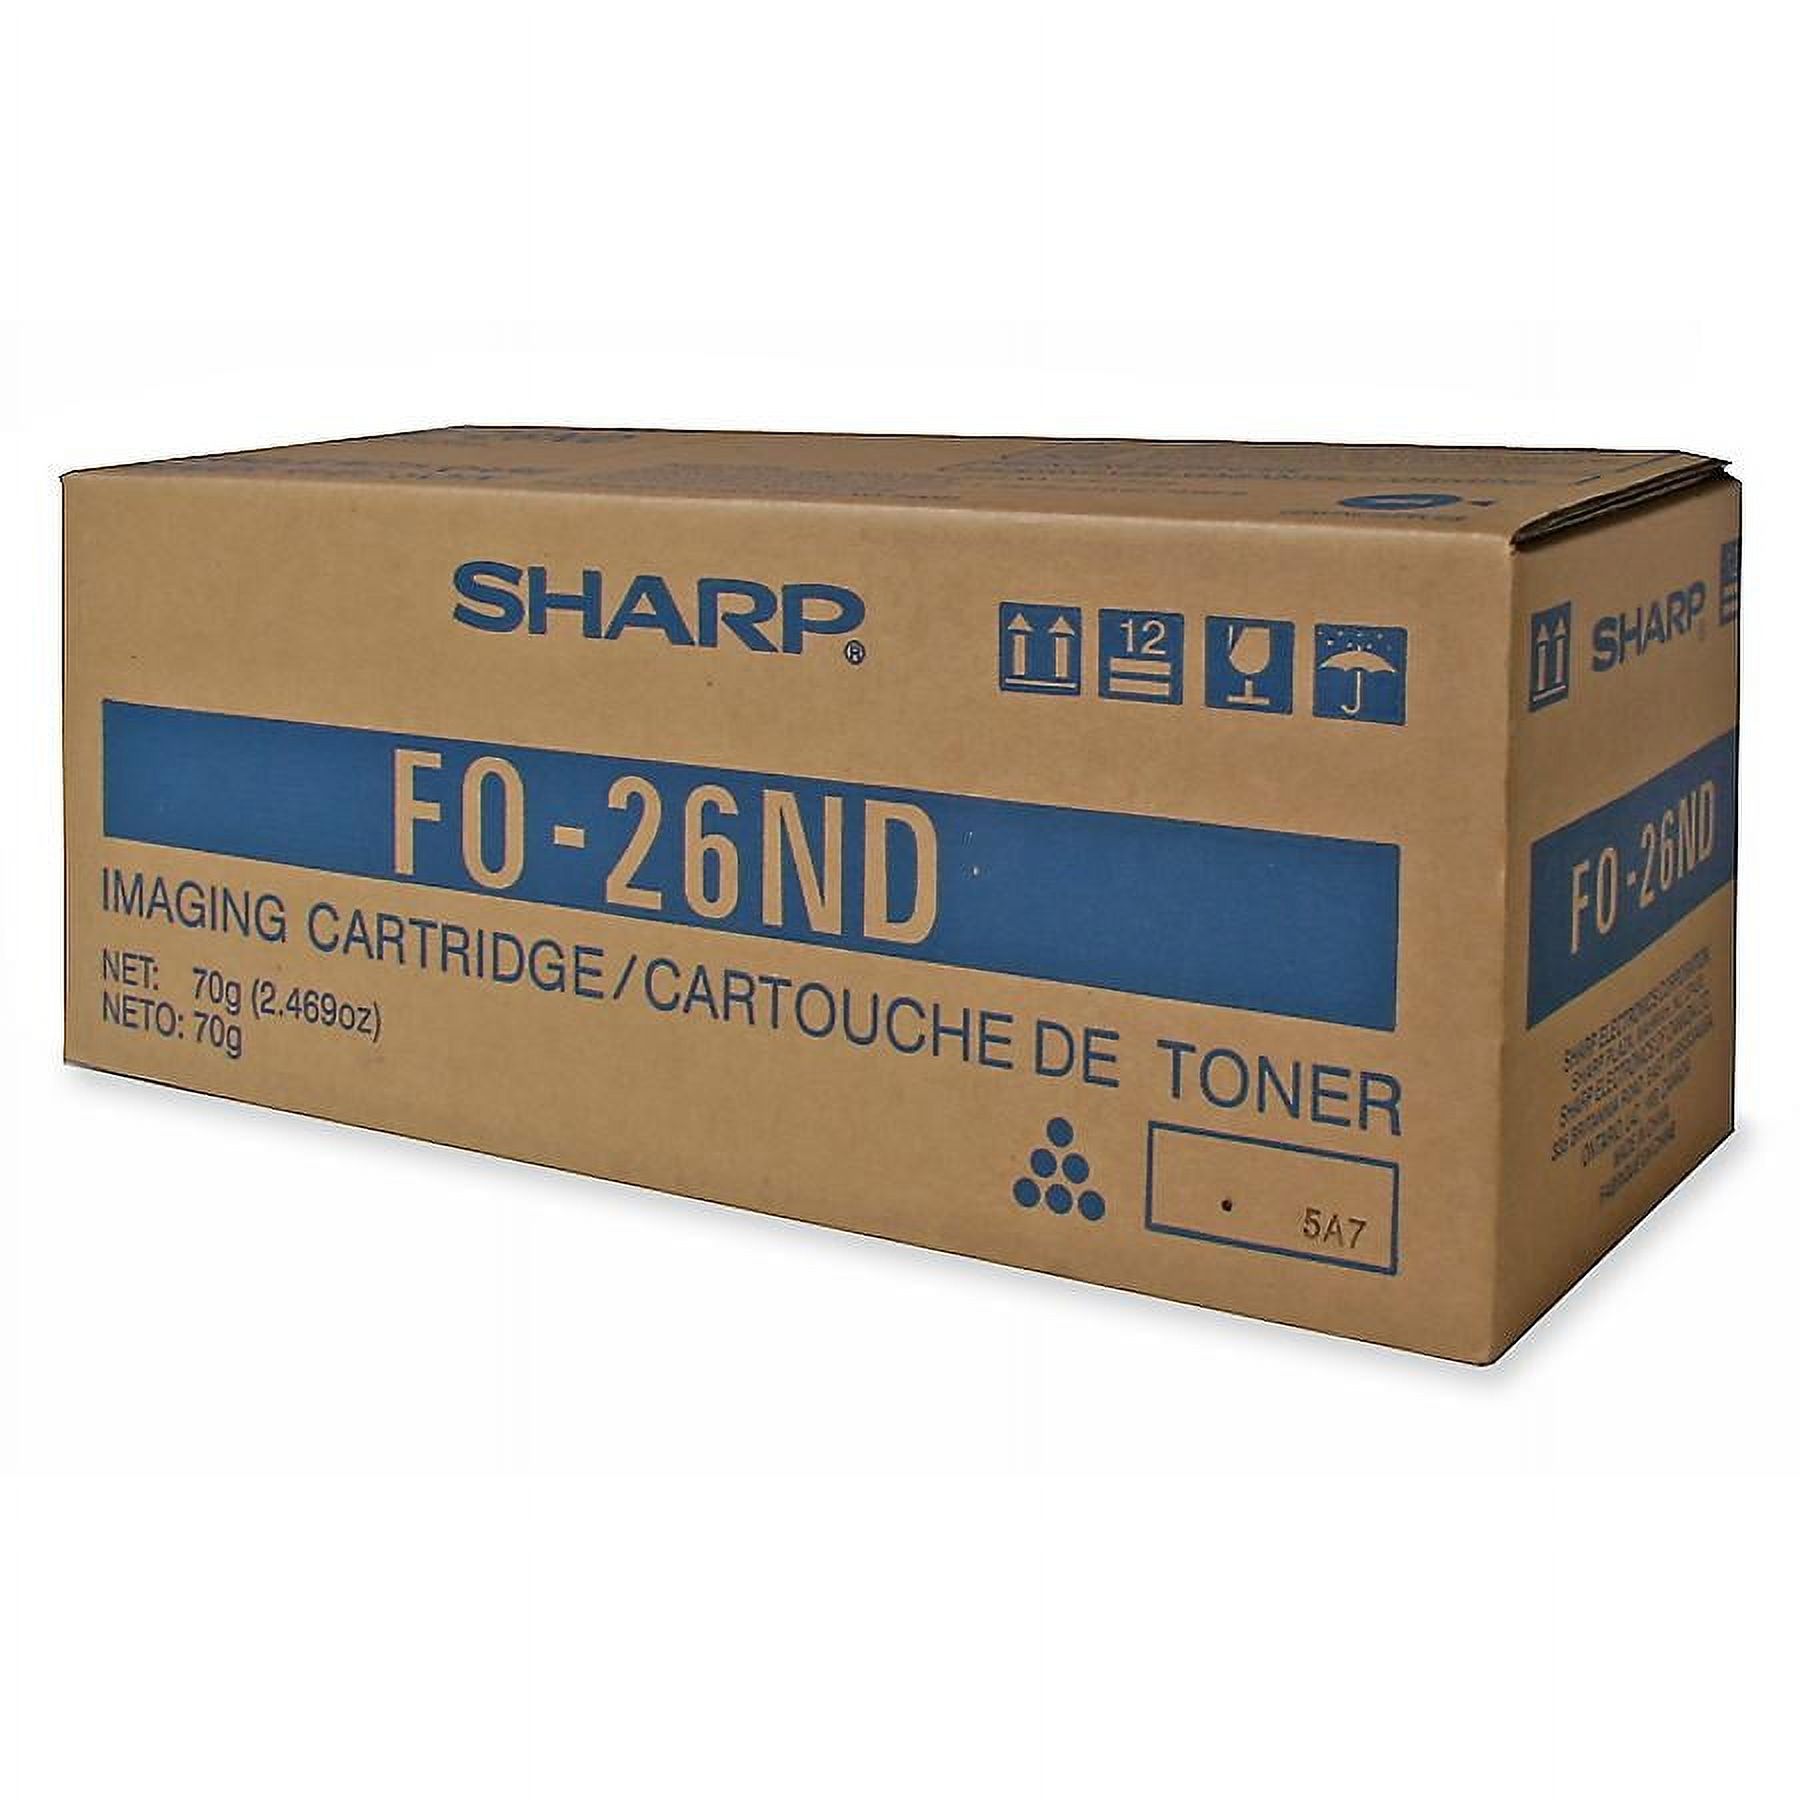 SHARP FO-2600 Toner Cartridge (2,000 yield) - image 2 of 2